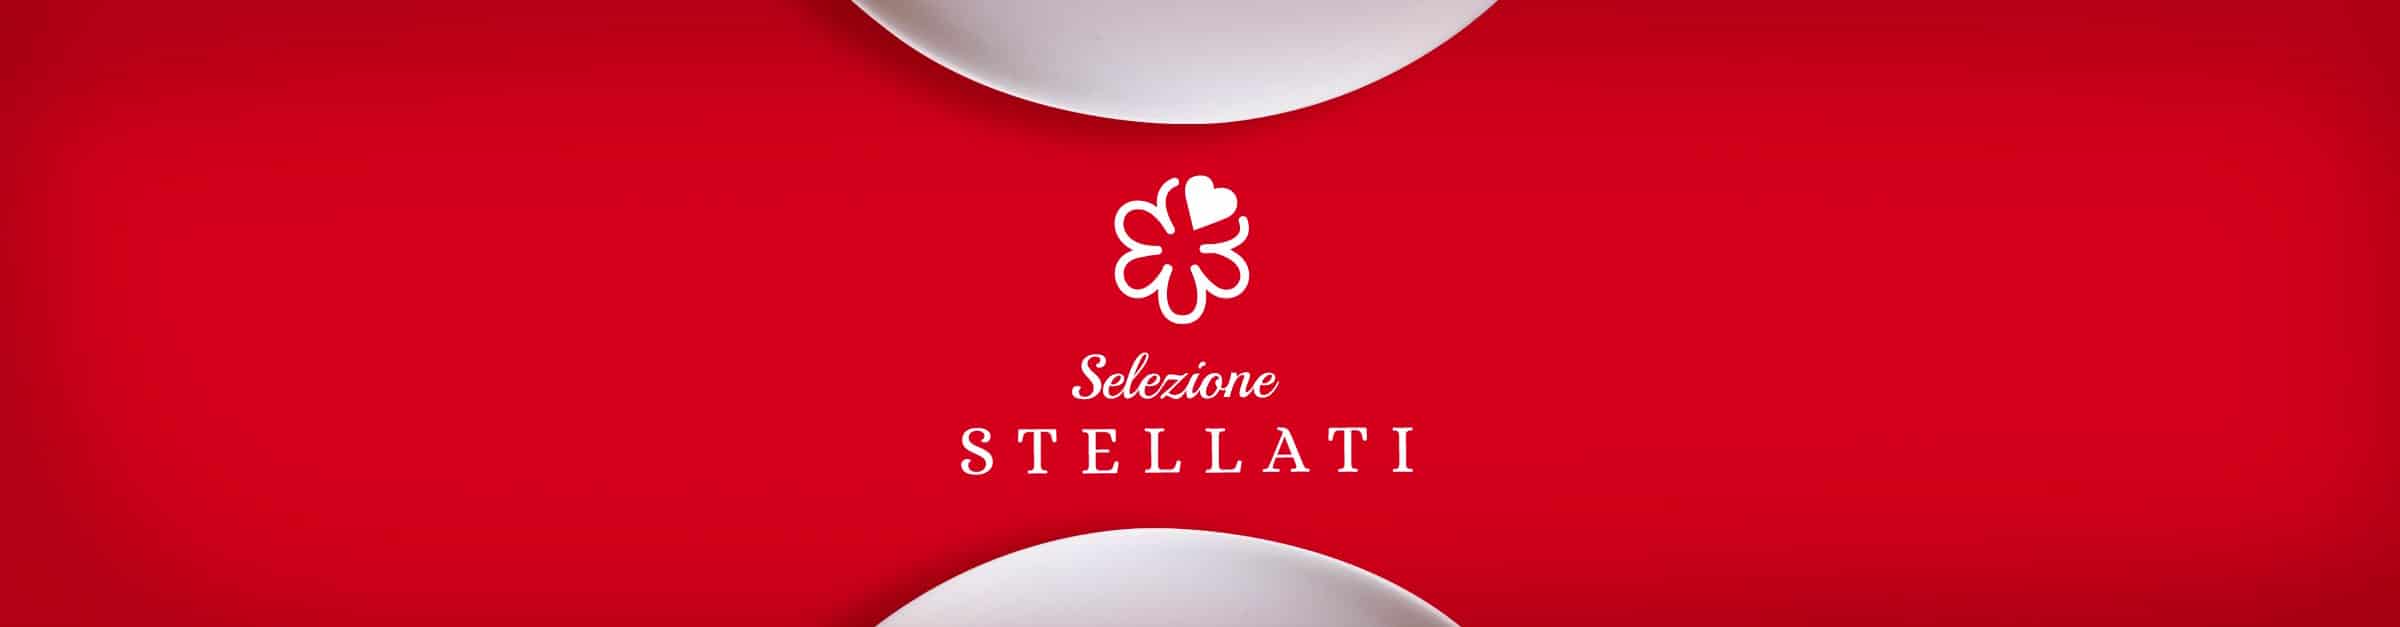 Recensioni Stellati - Simon Italian Food